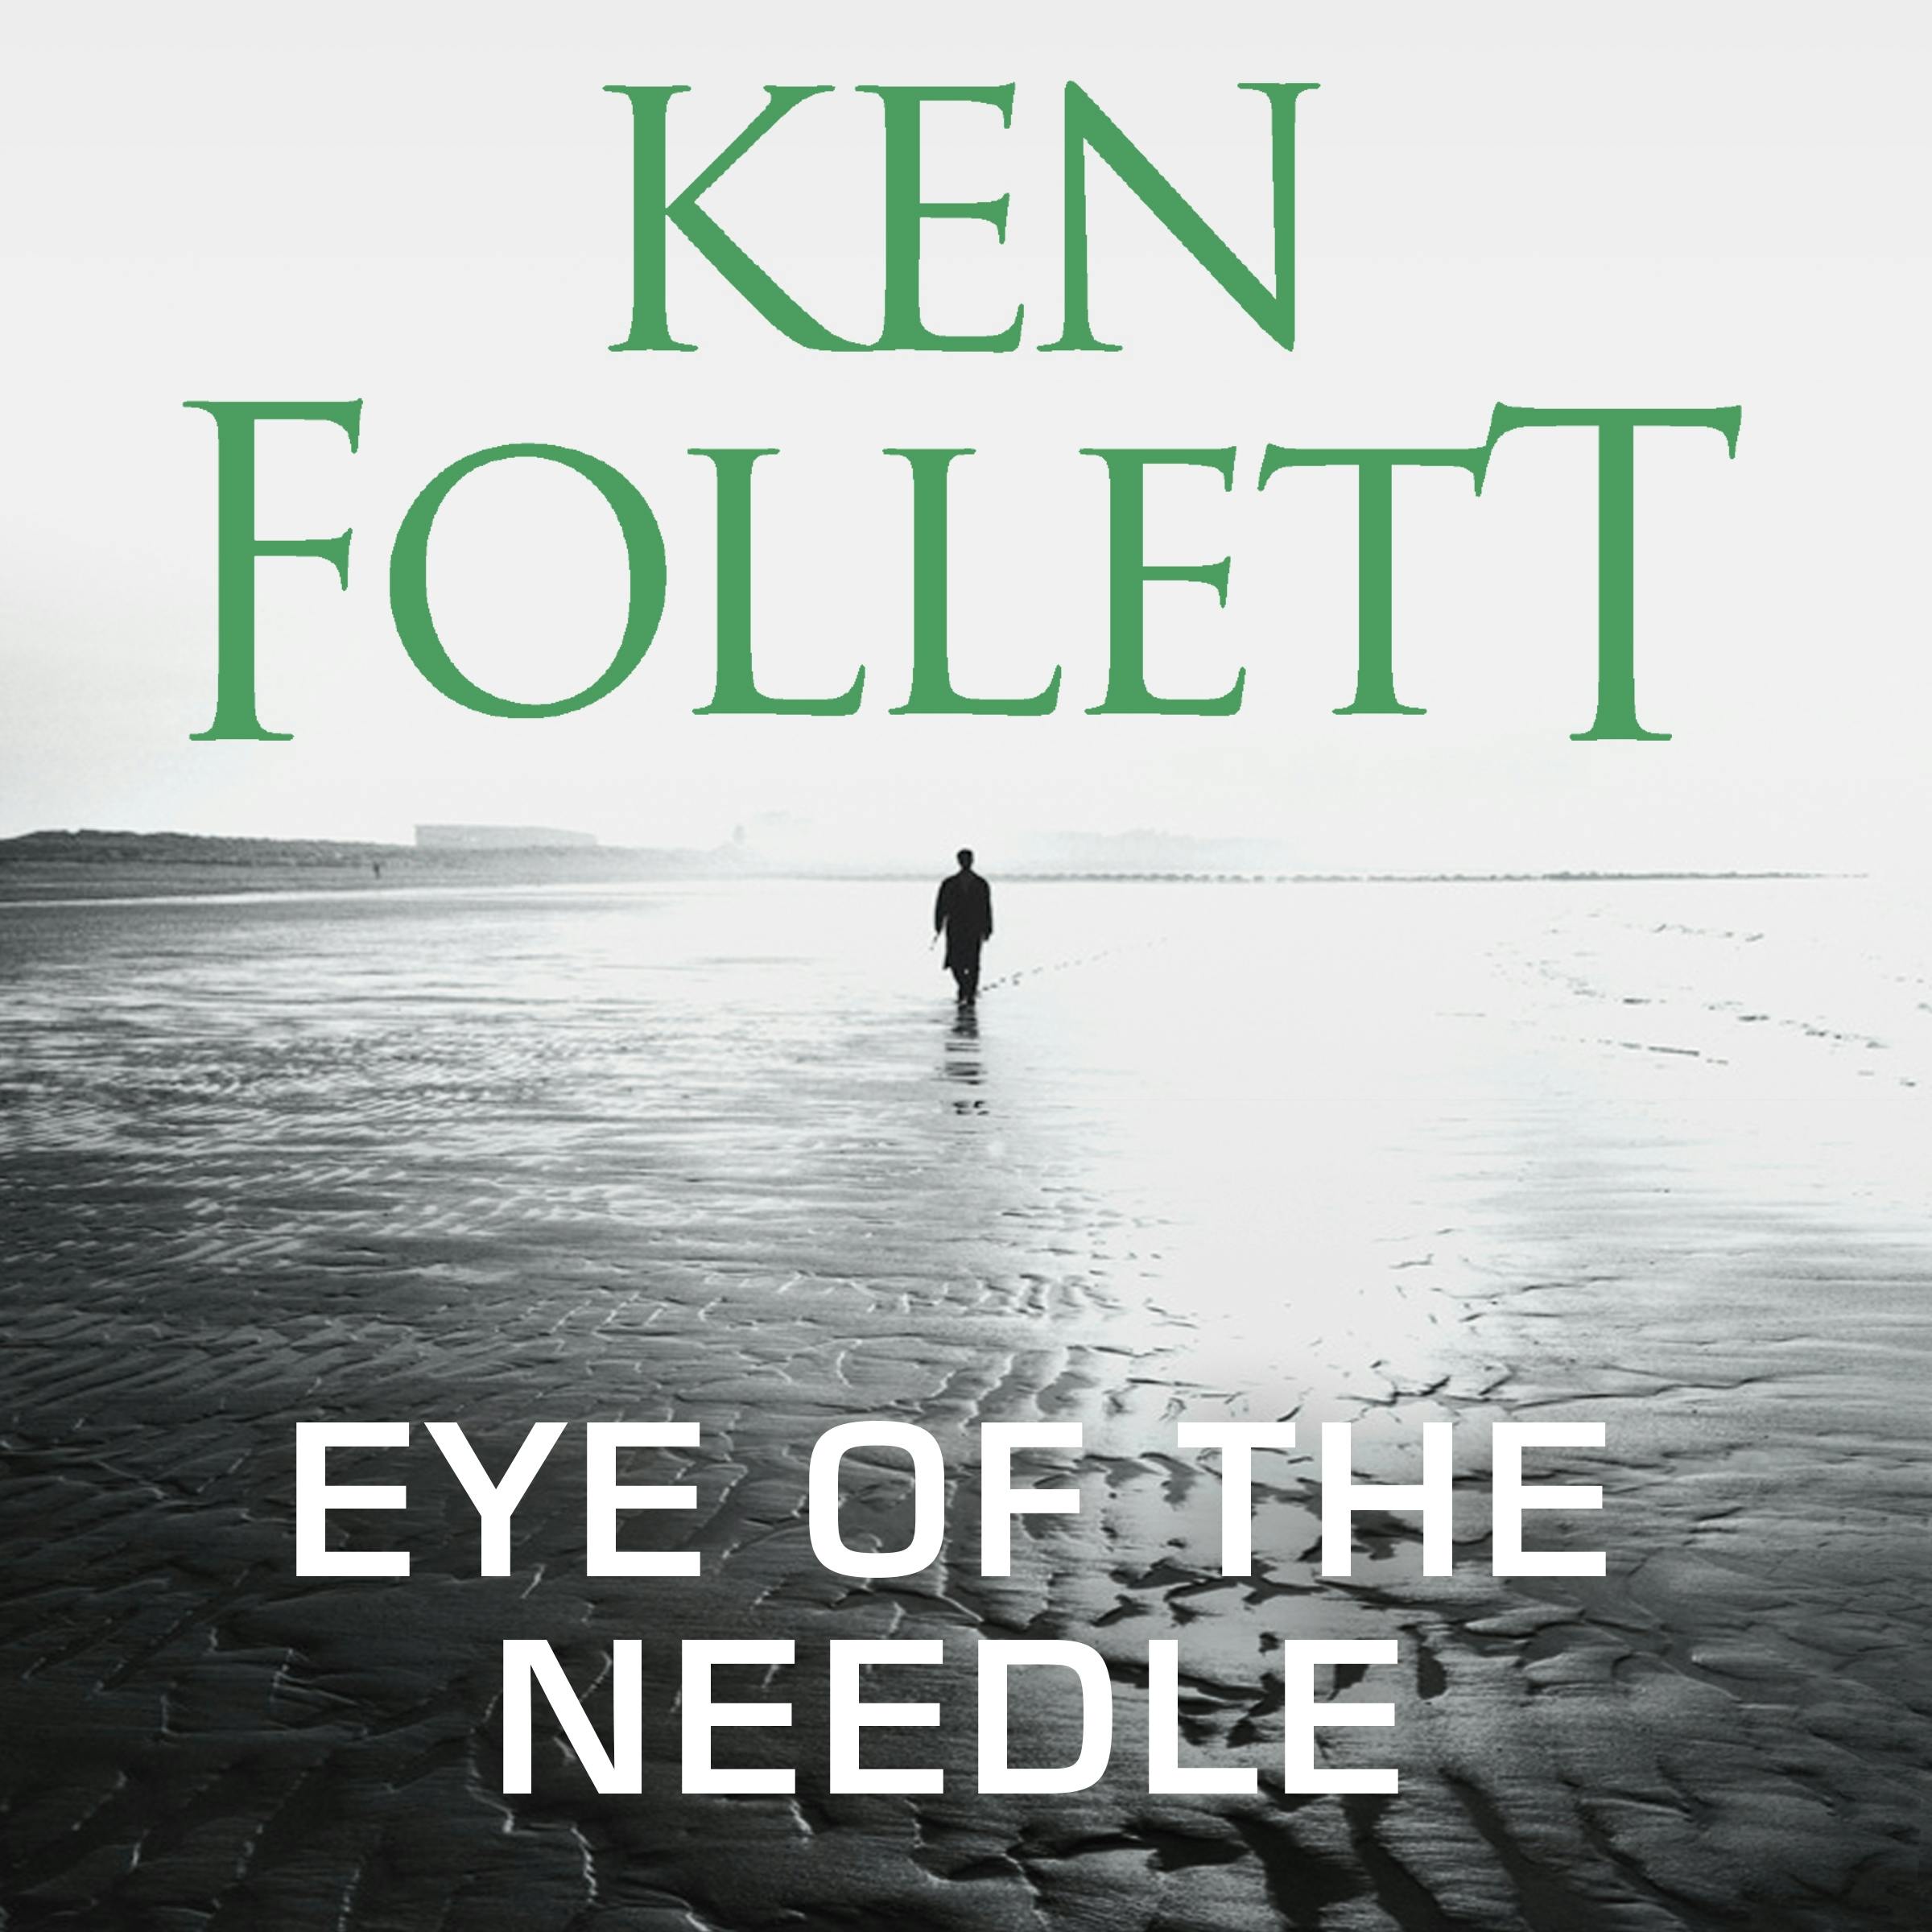 Eye of the Needle - Ken Follett